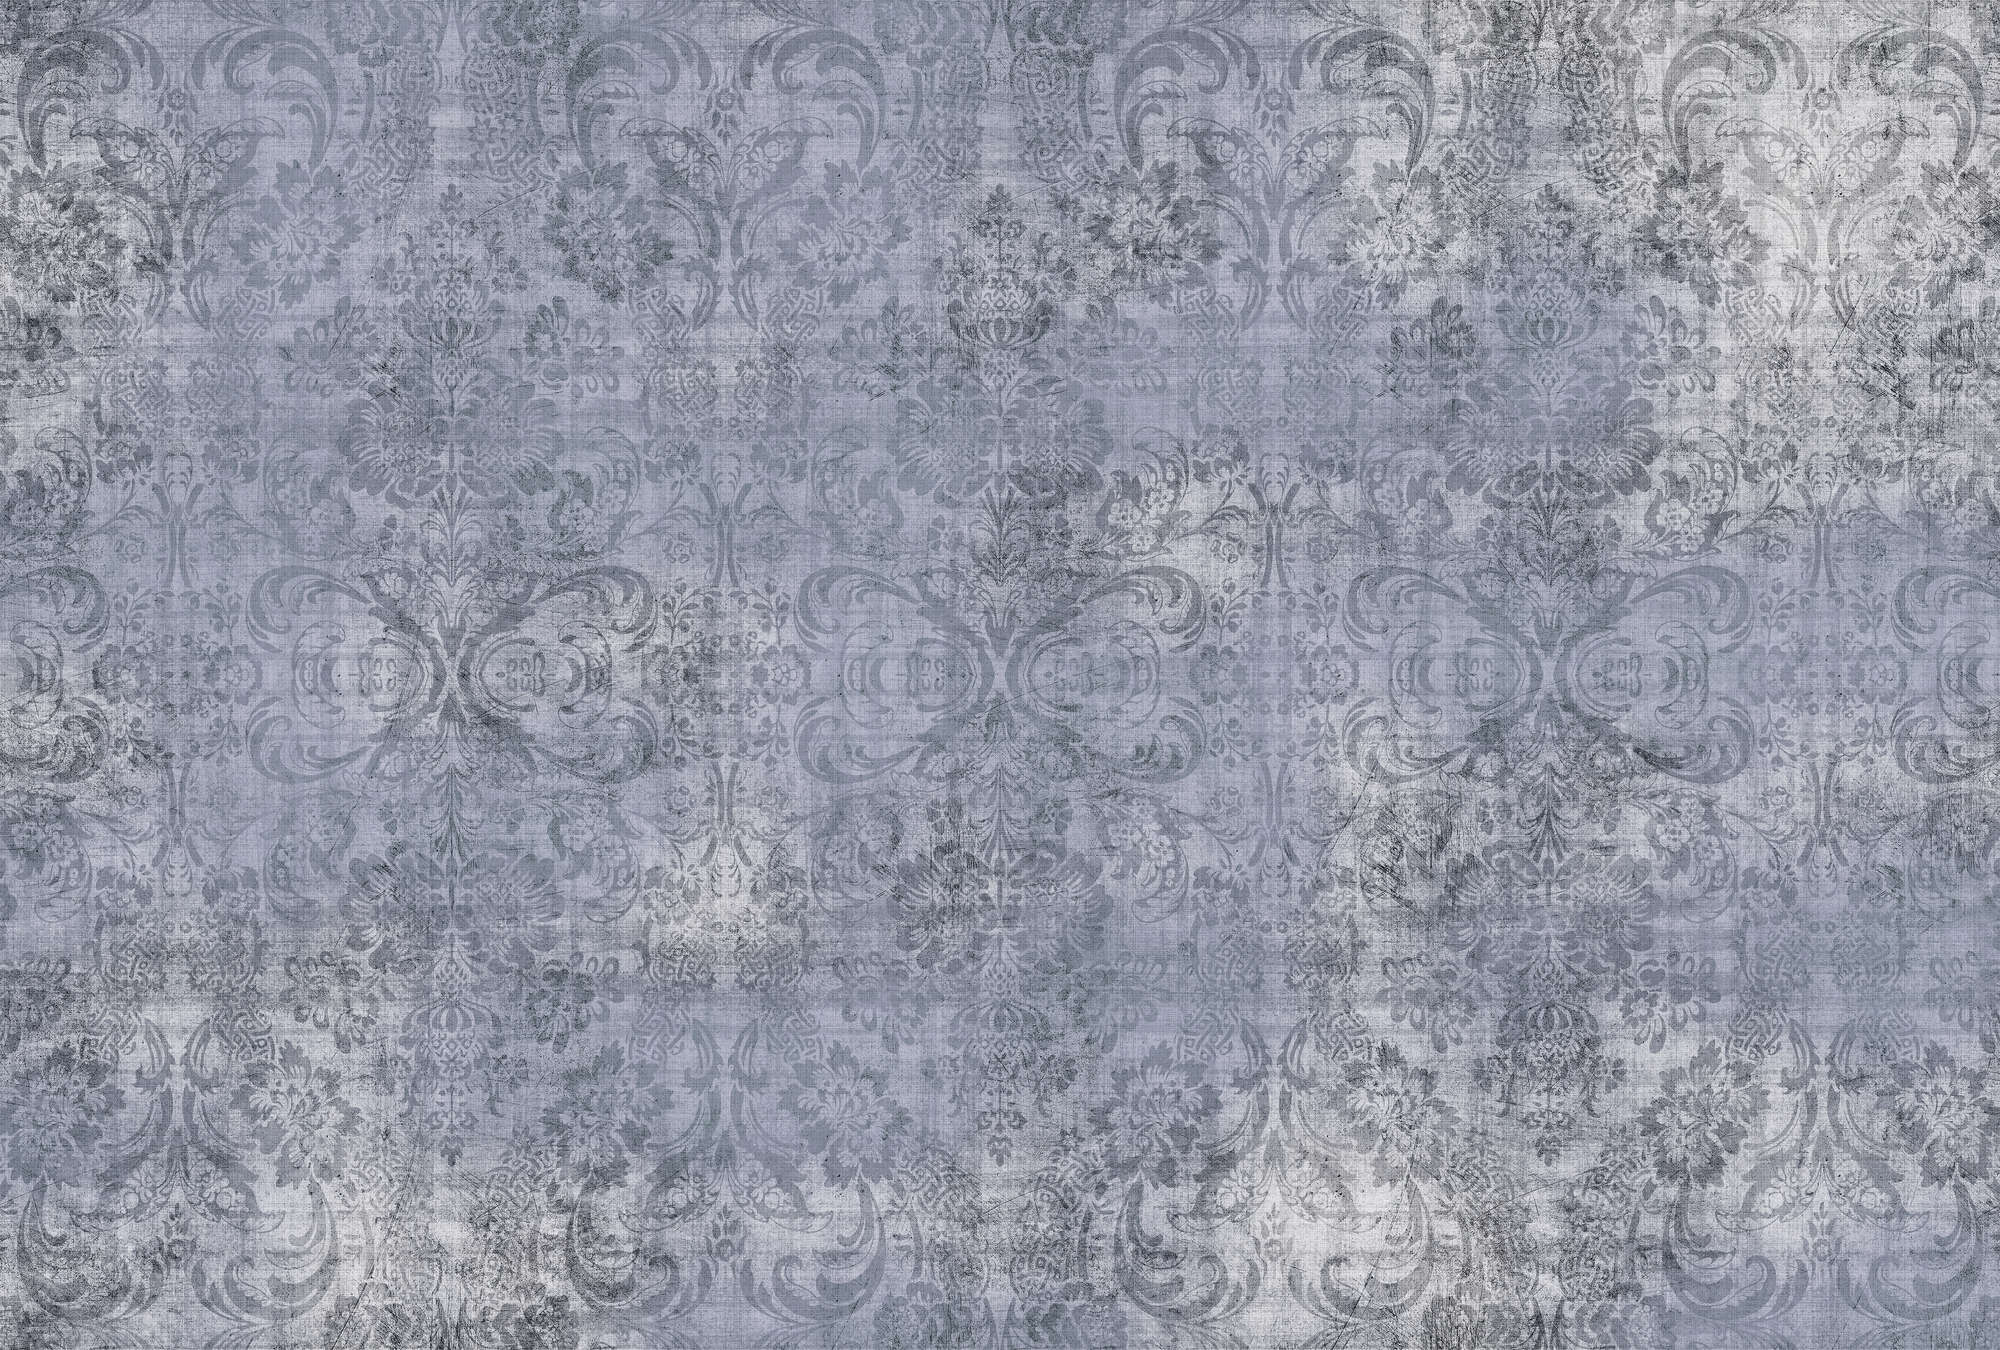             Old damask 3 - wallpaper in natural linen structure blue mottled ornaments - Blue | Premium smooth fleece
        